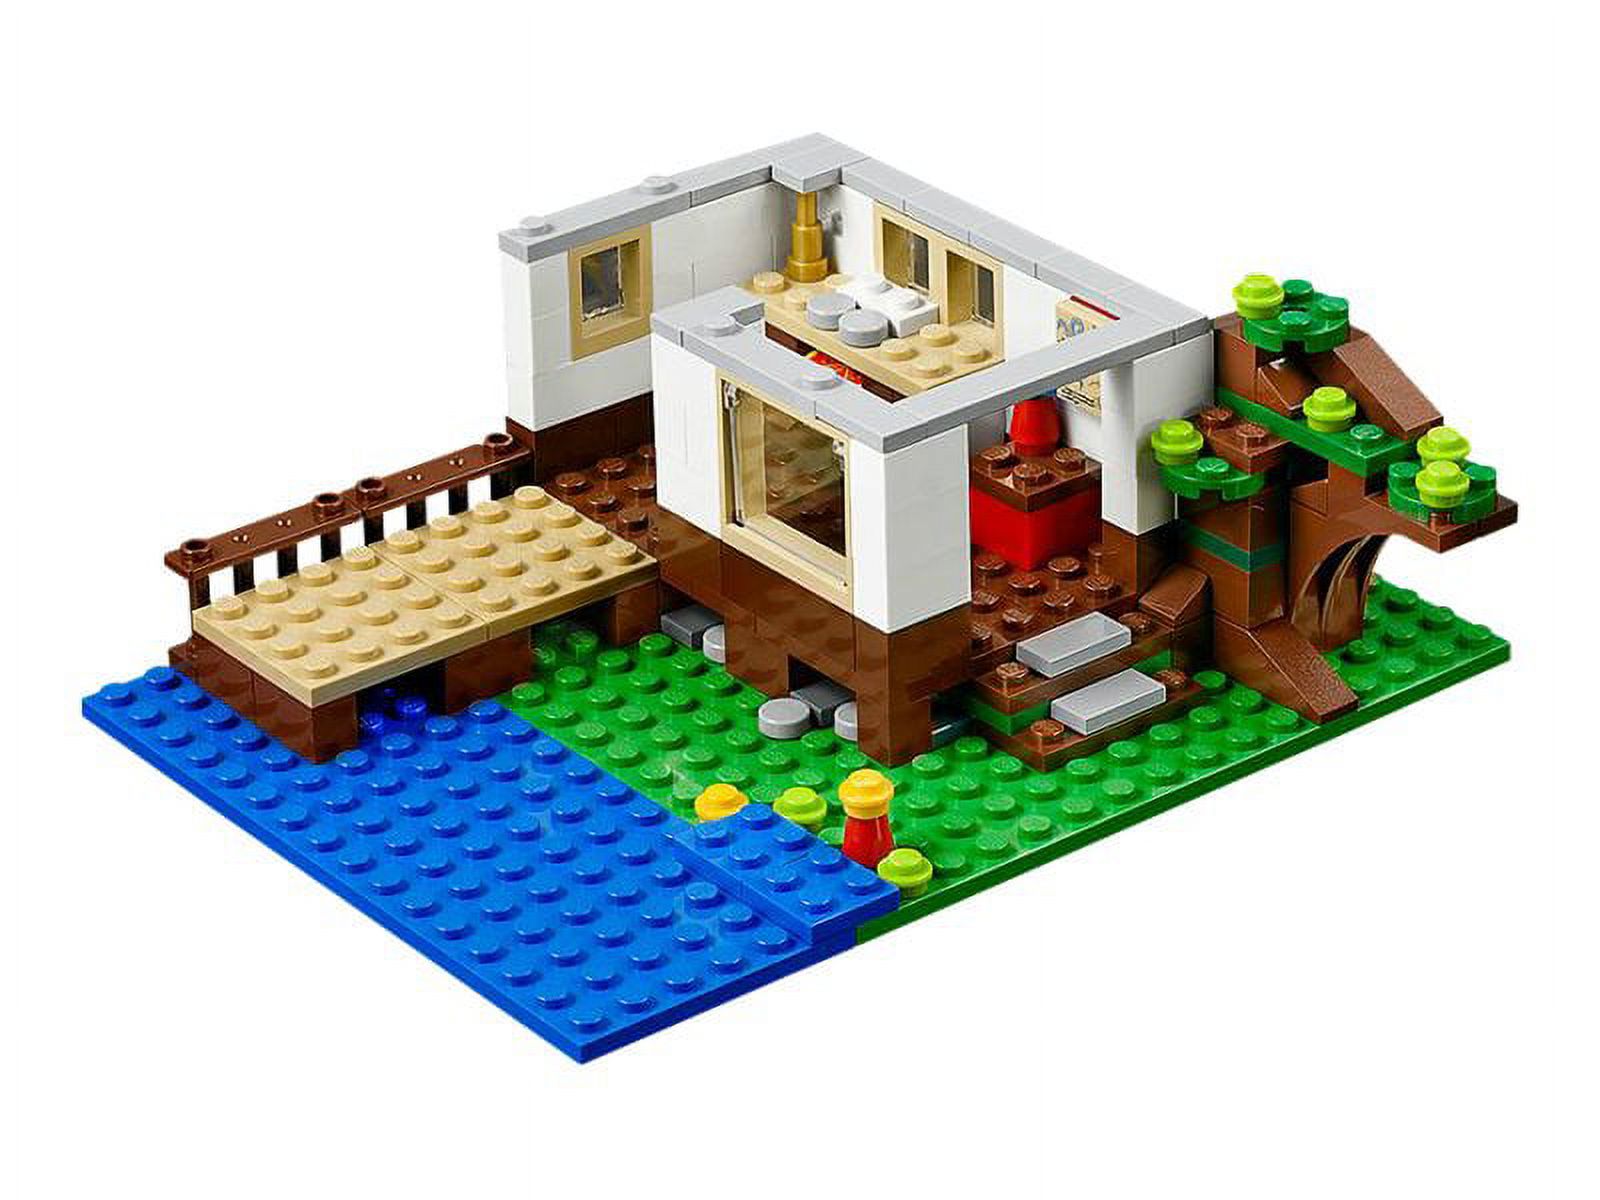 LEGO Creator 31010 - Tree House - image 2 of 4